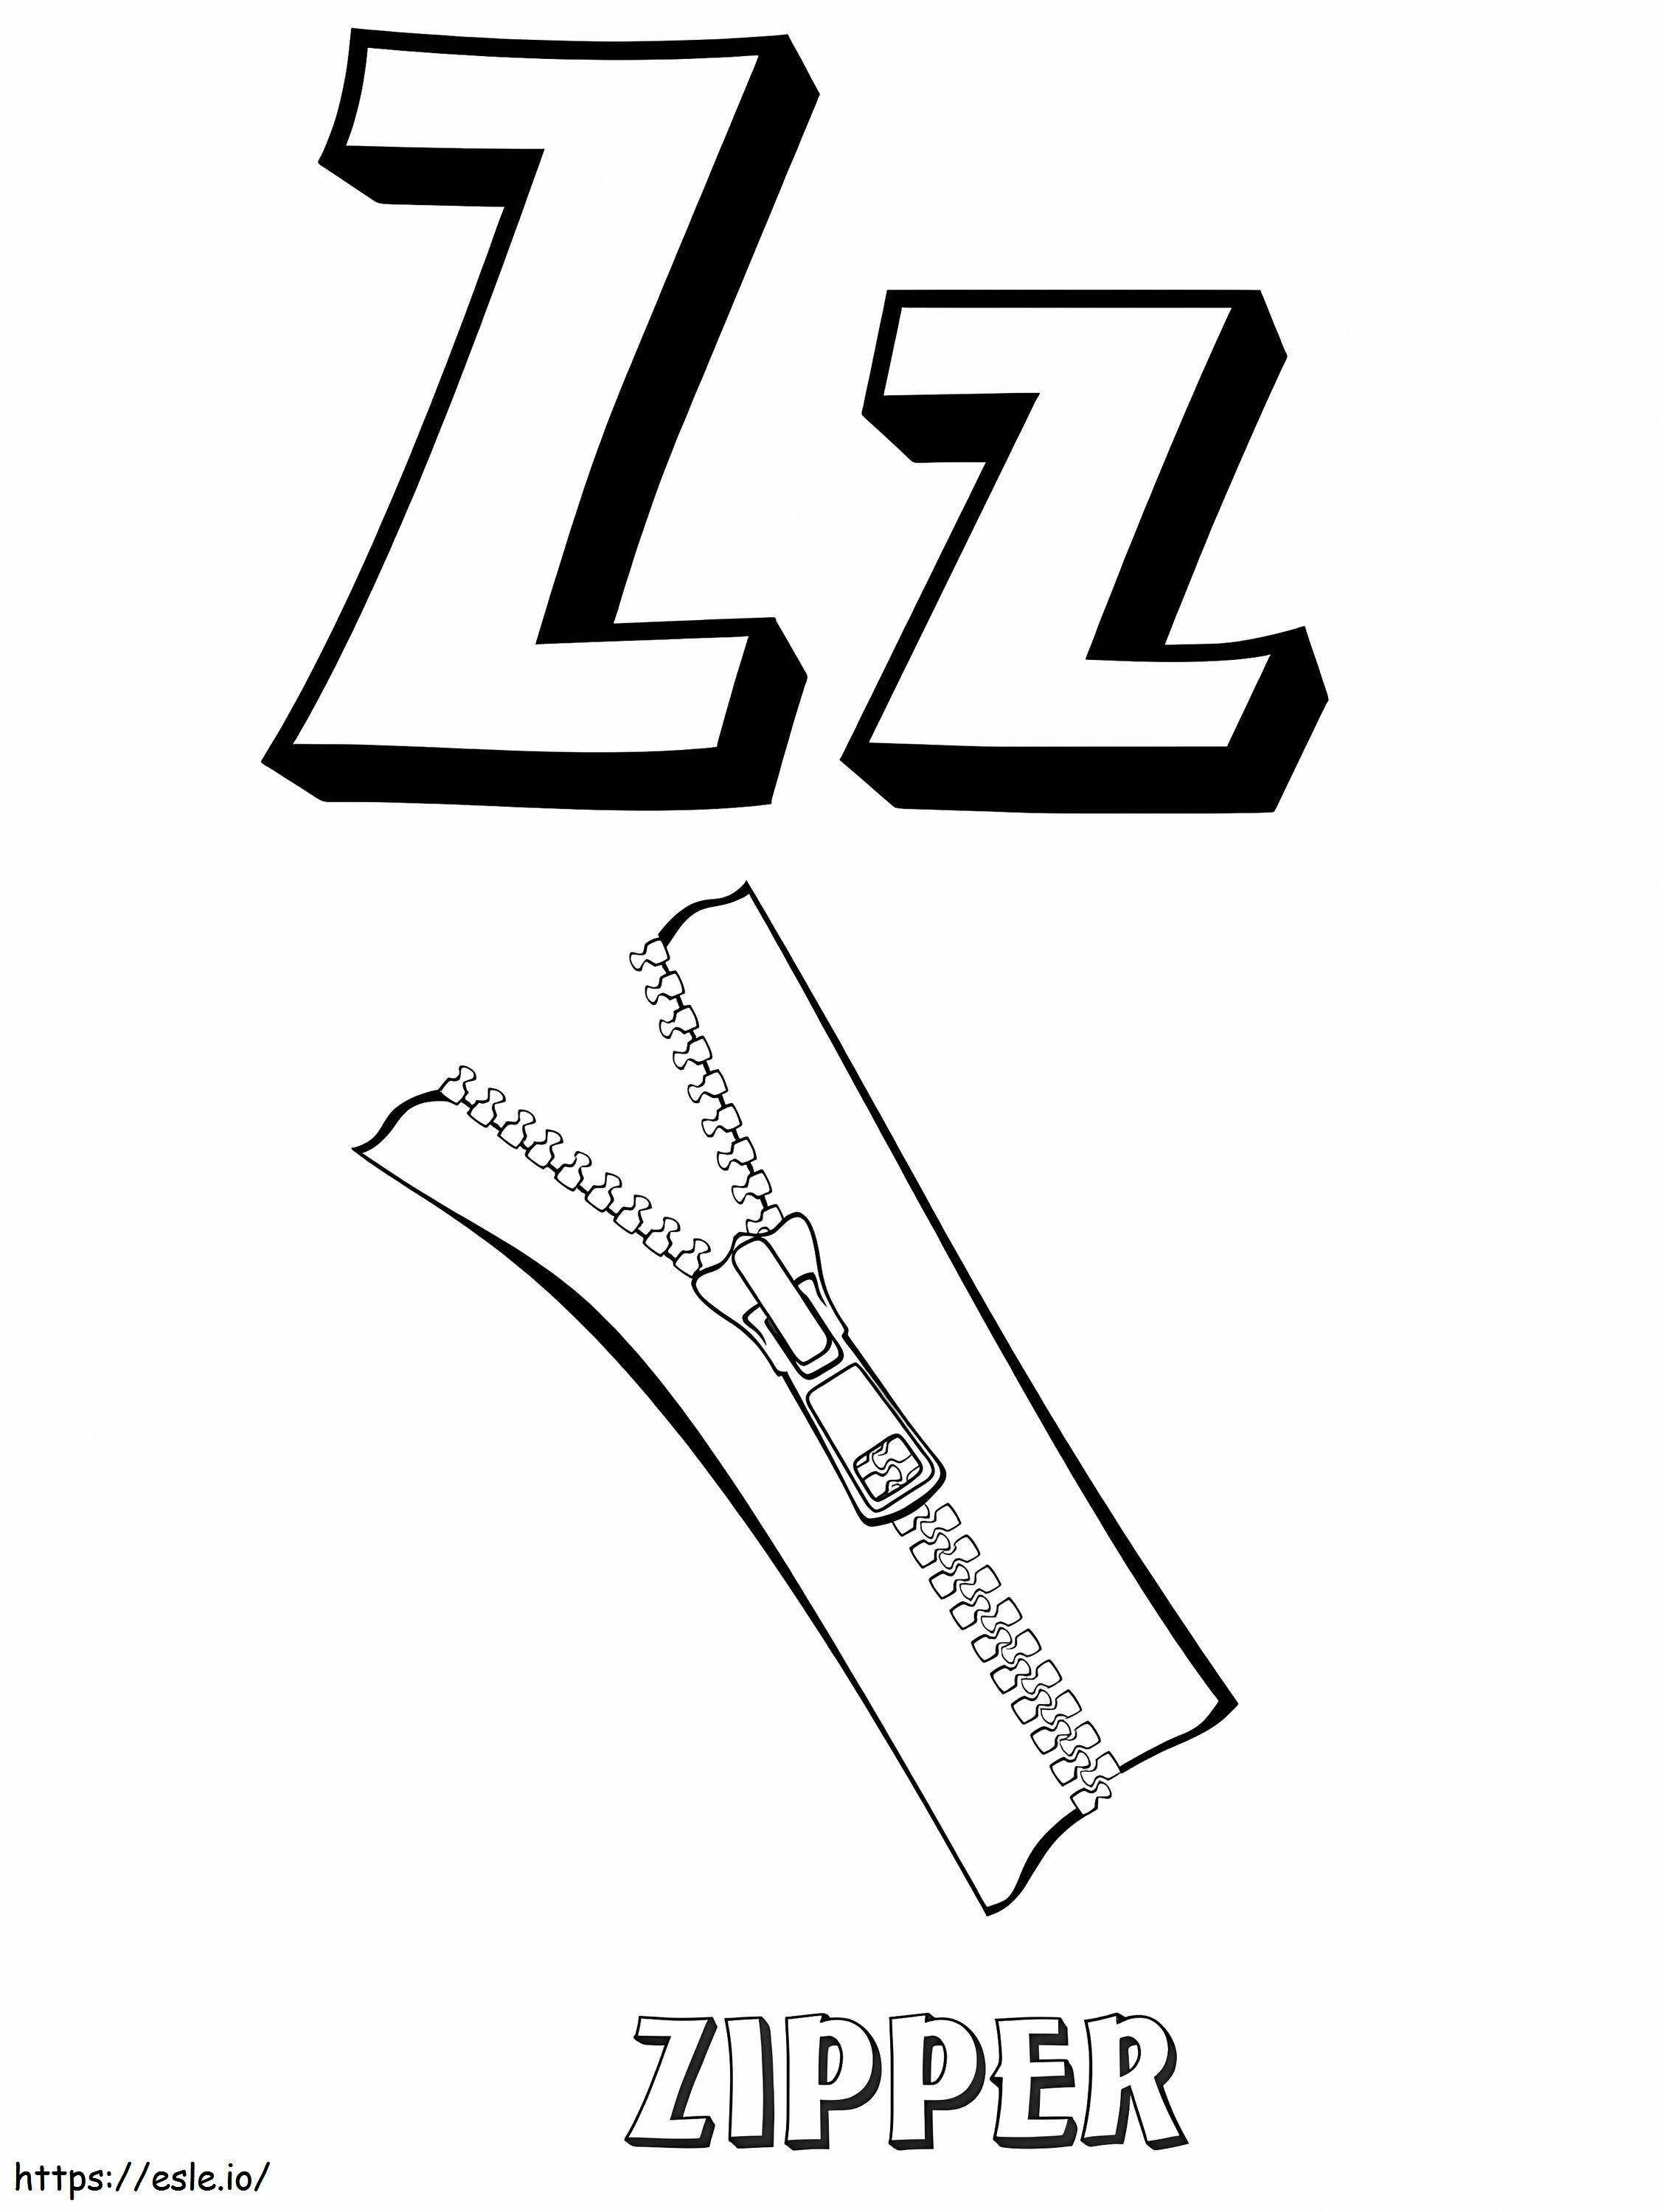 Zipper Letter Z 1 coloring page